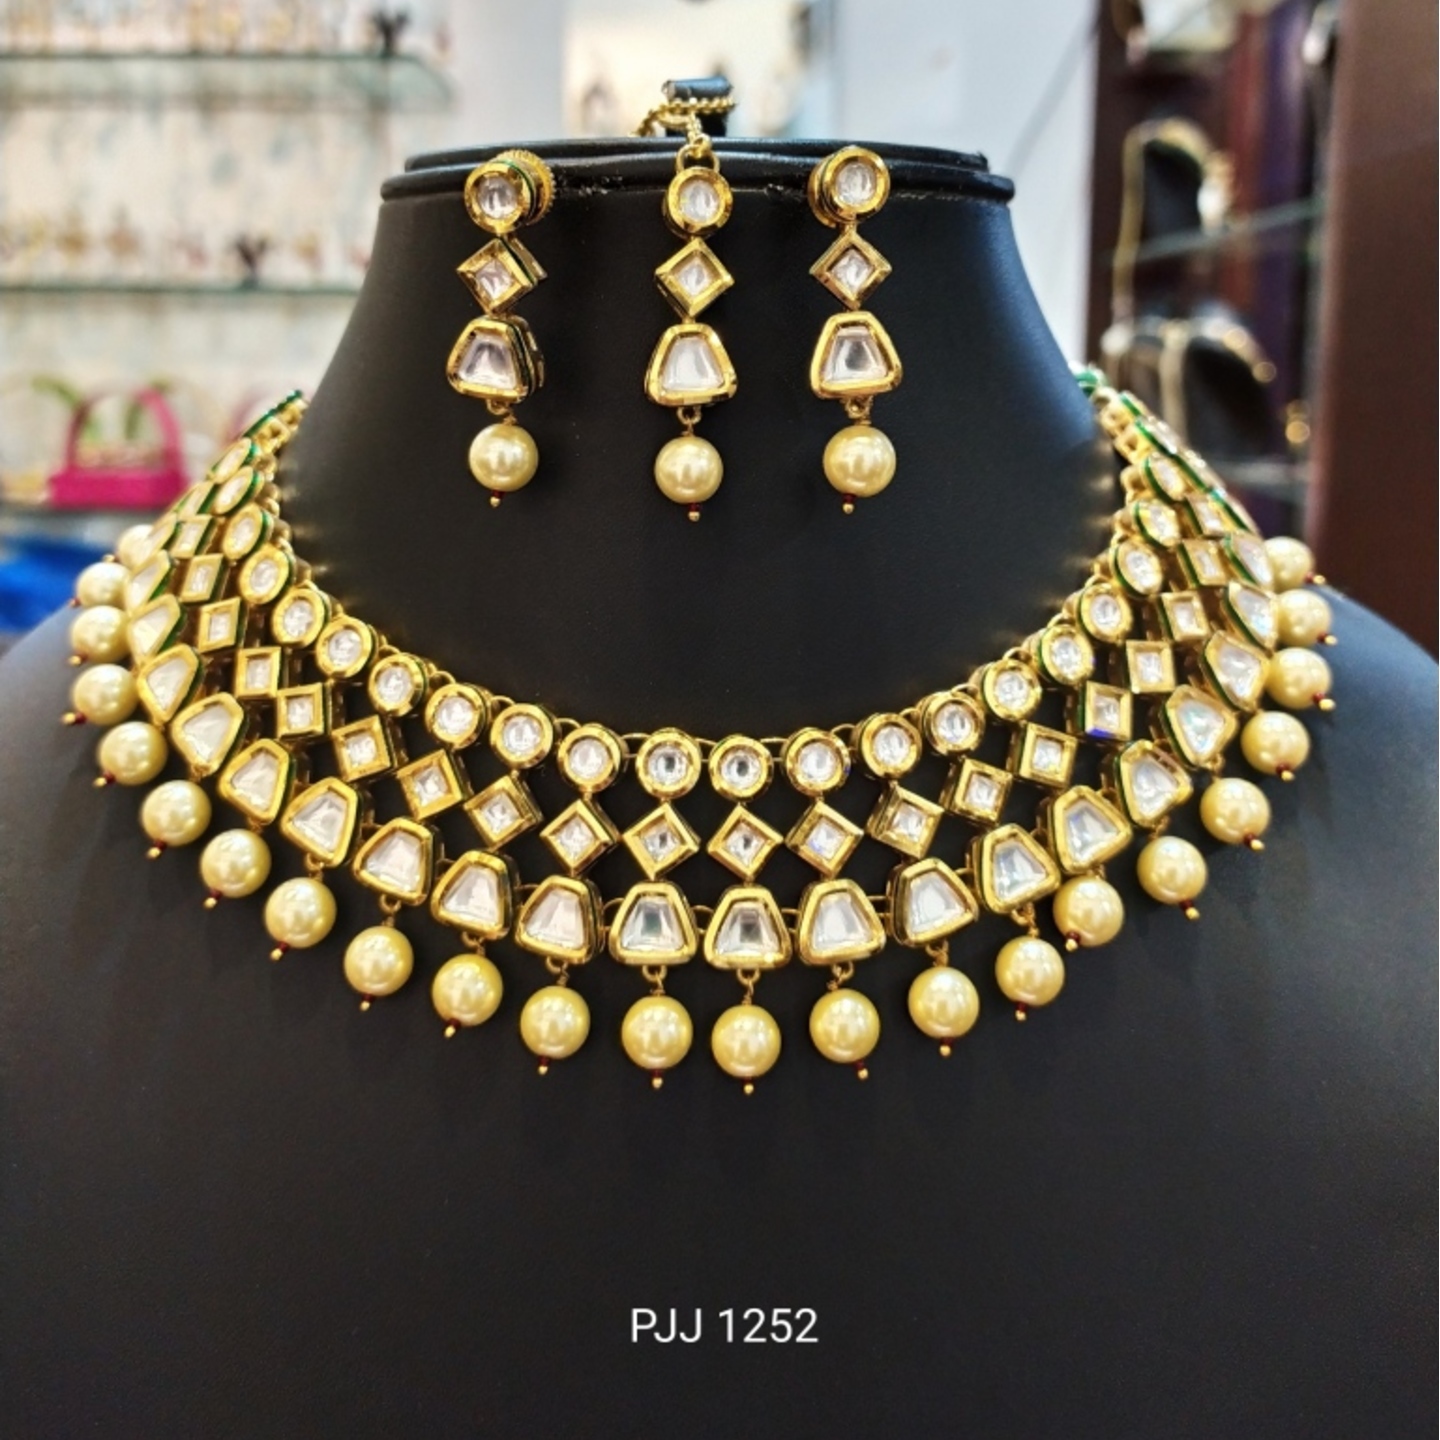 Kundan Meena Necklace Set with Pearl Drops and Tikka